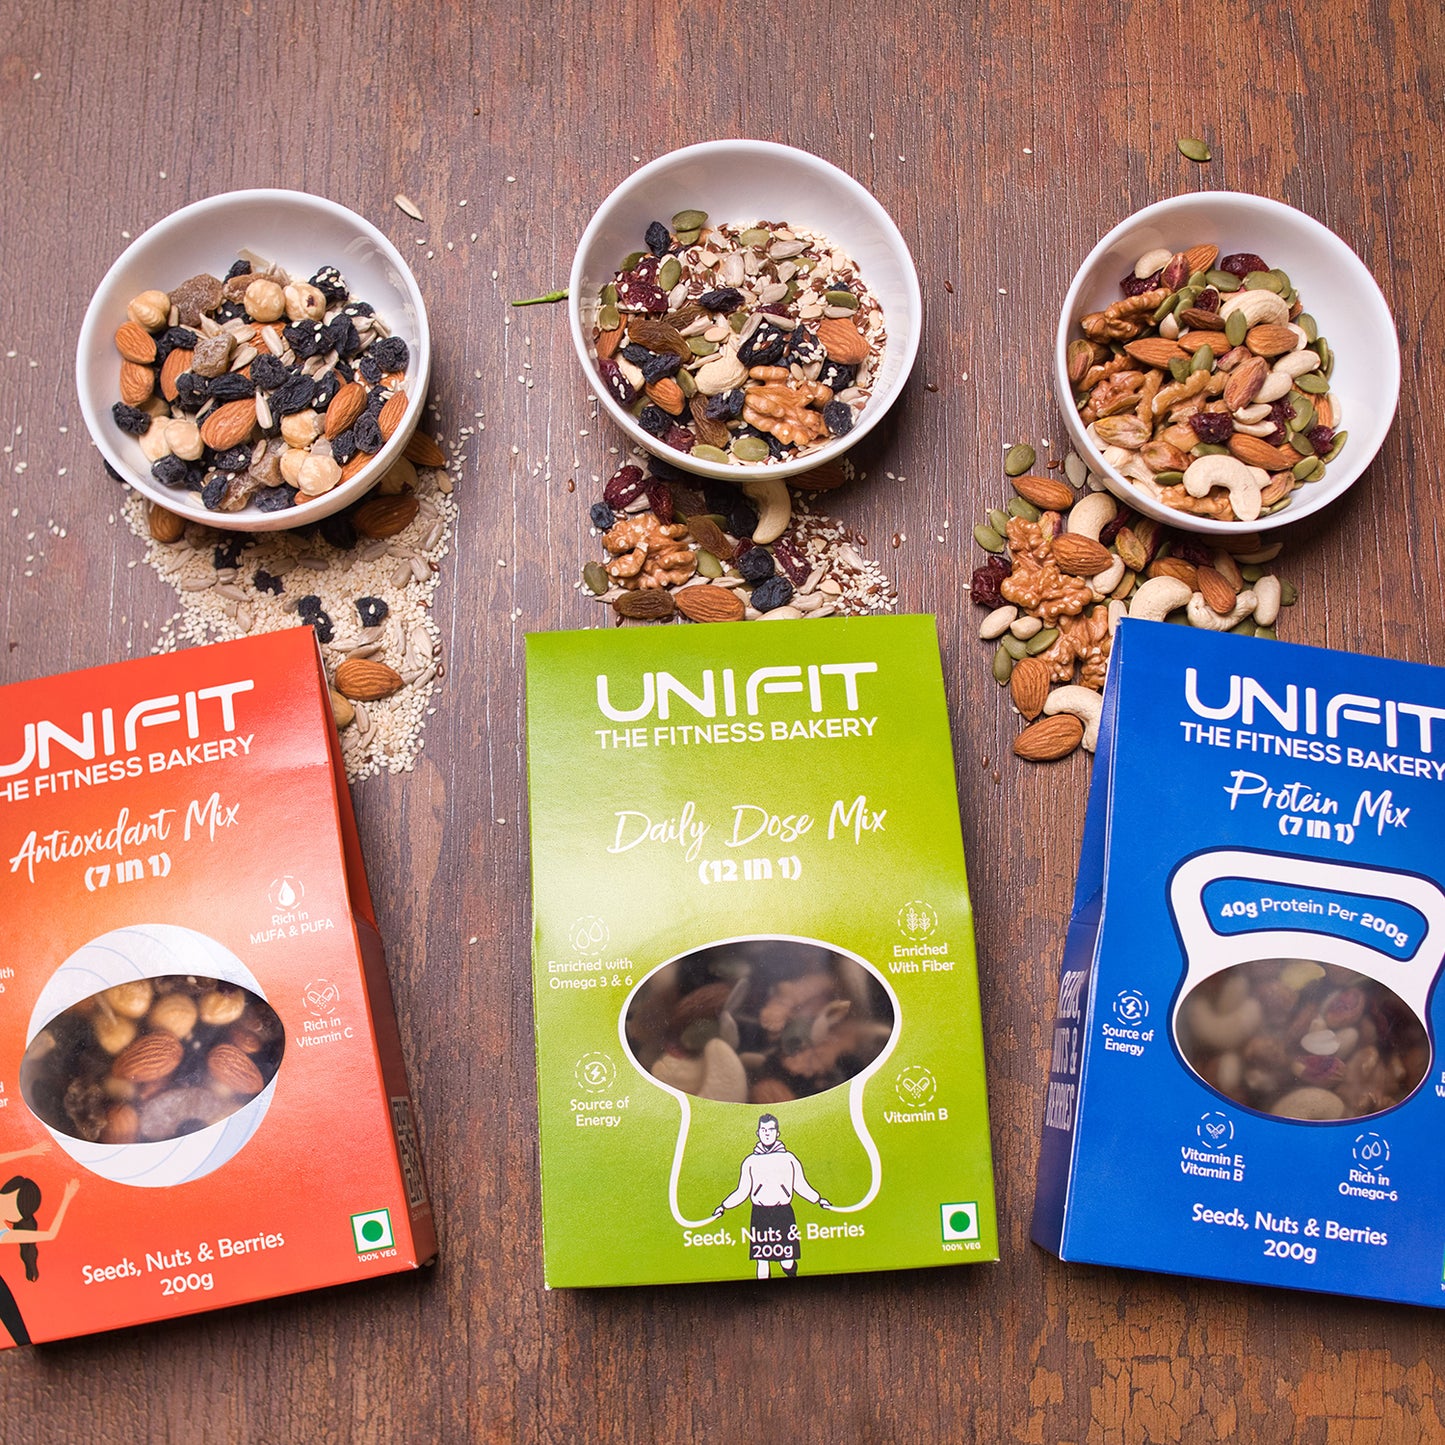 Unifit Supermix Gift Hamper (UNIFIT Gift Hamper, Mixed Dry Fruits)